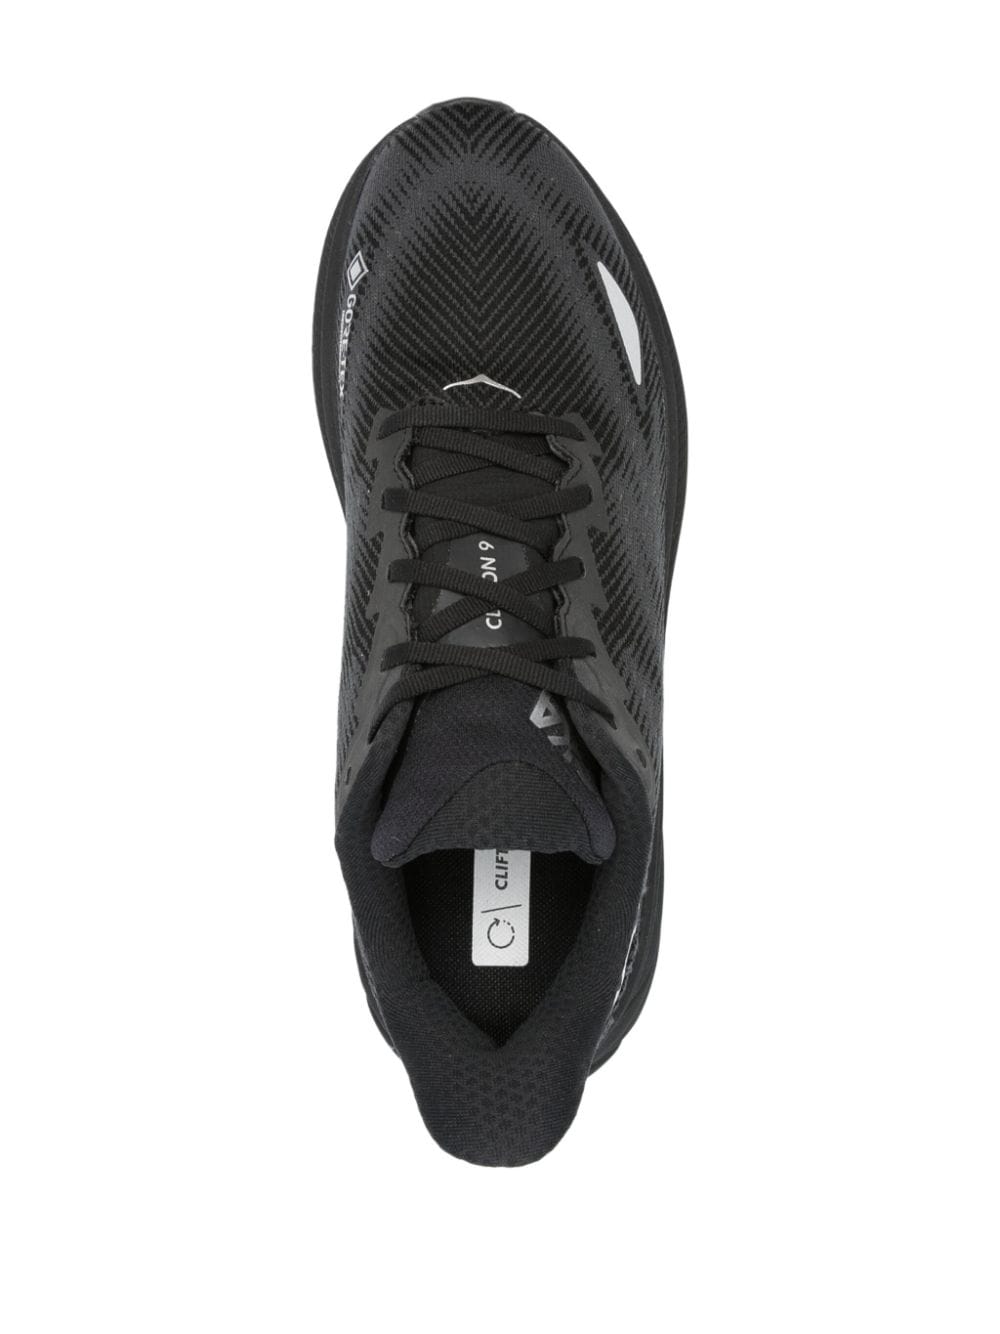 Clifton 9 GTX sneakers<BR/><BR/><BR/>